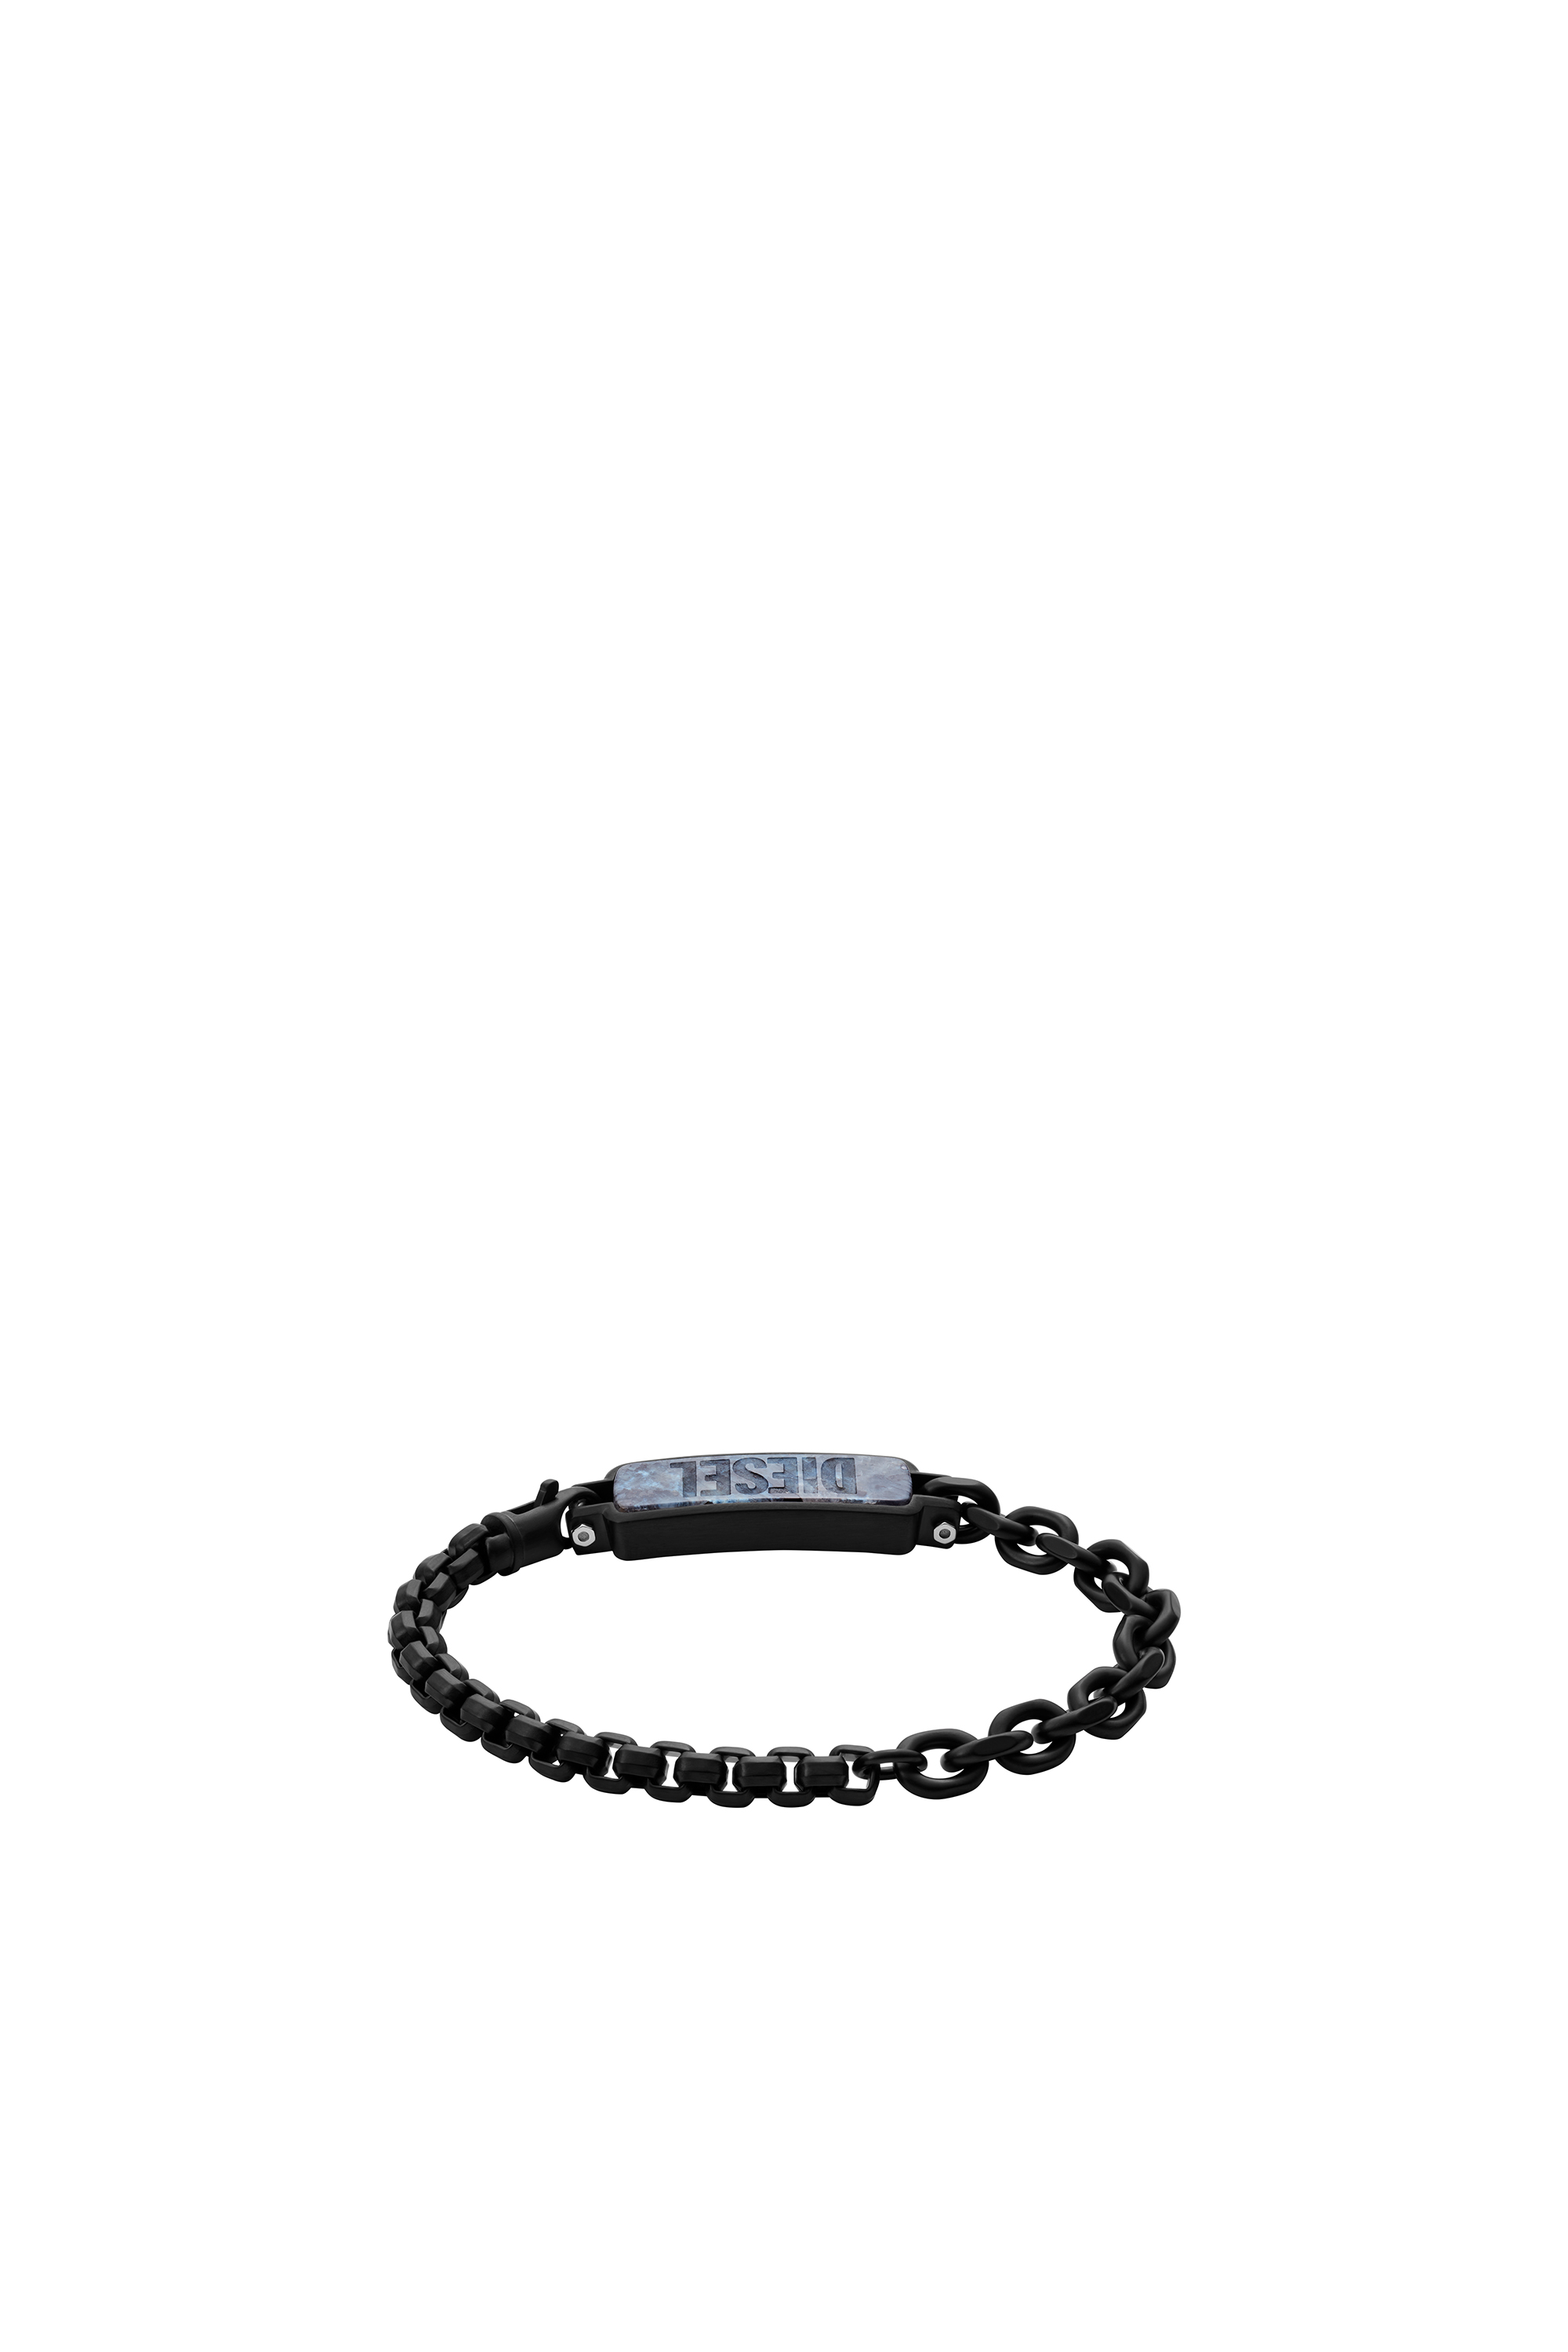 Visiter la boutique DIESELDiesel Bracelet Homme DX1002040 